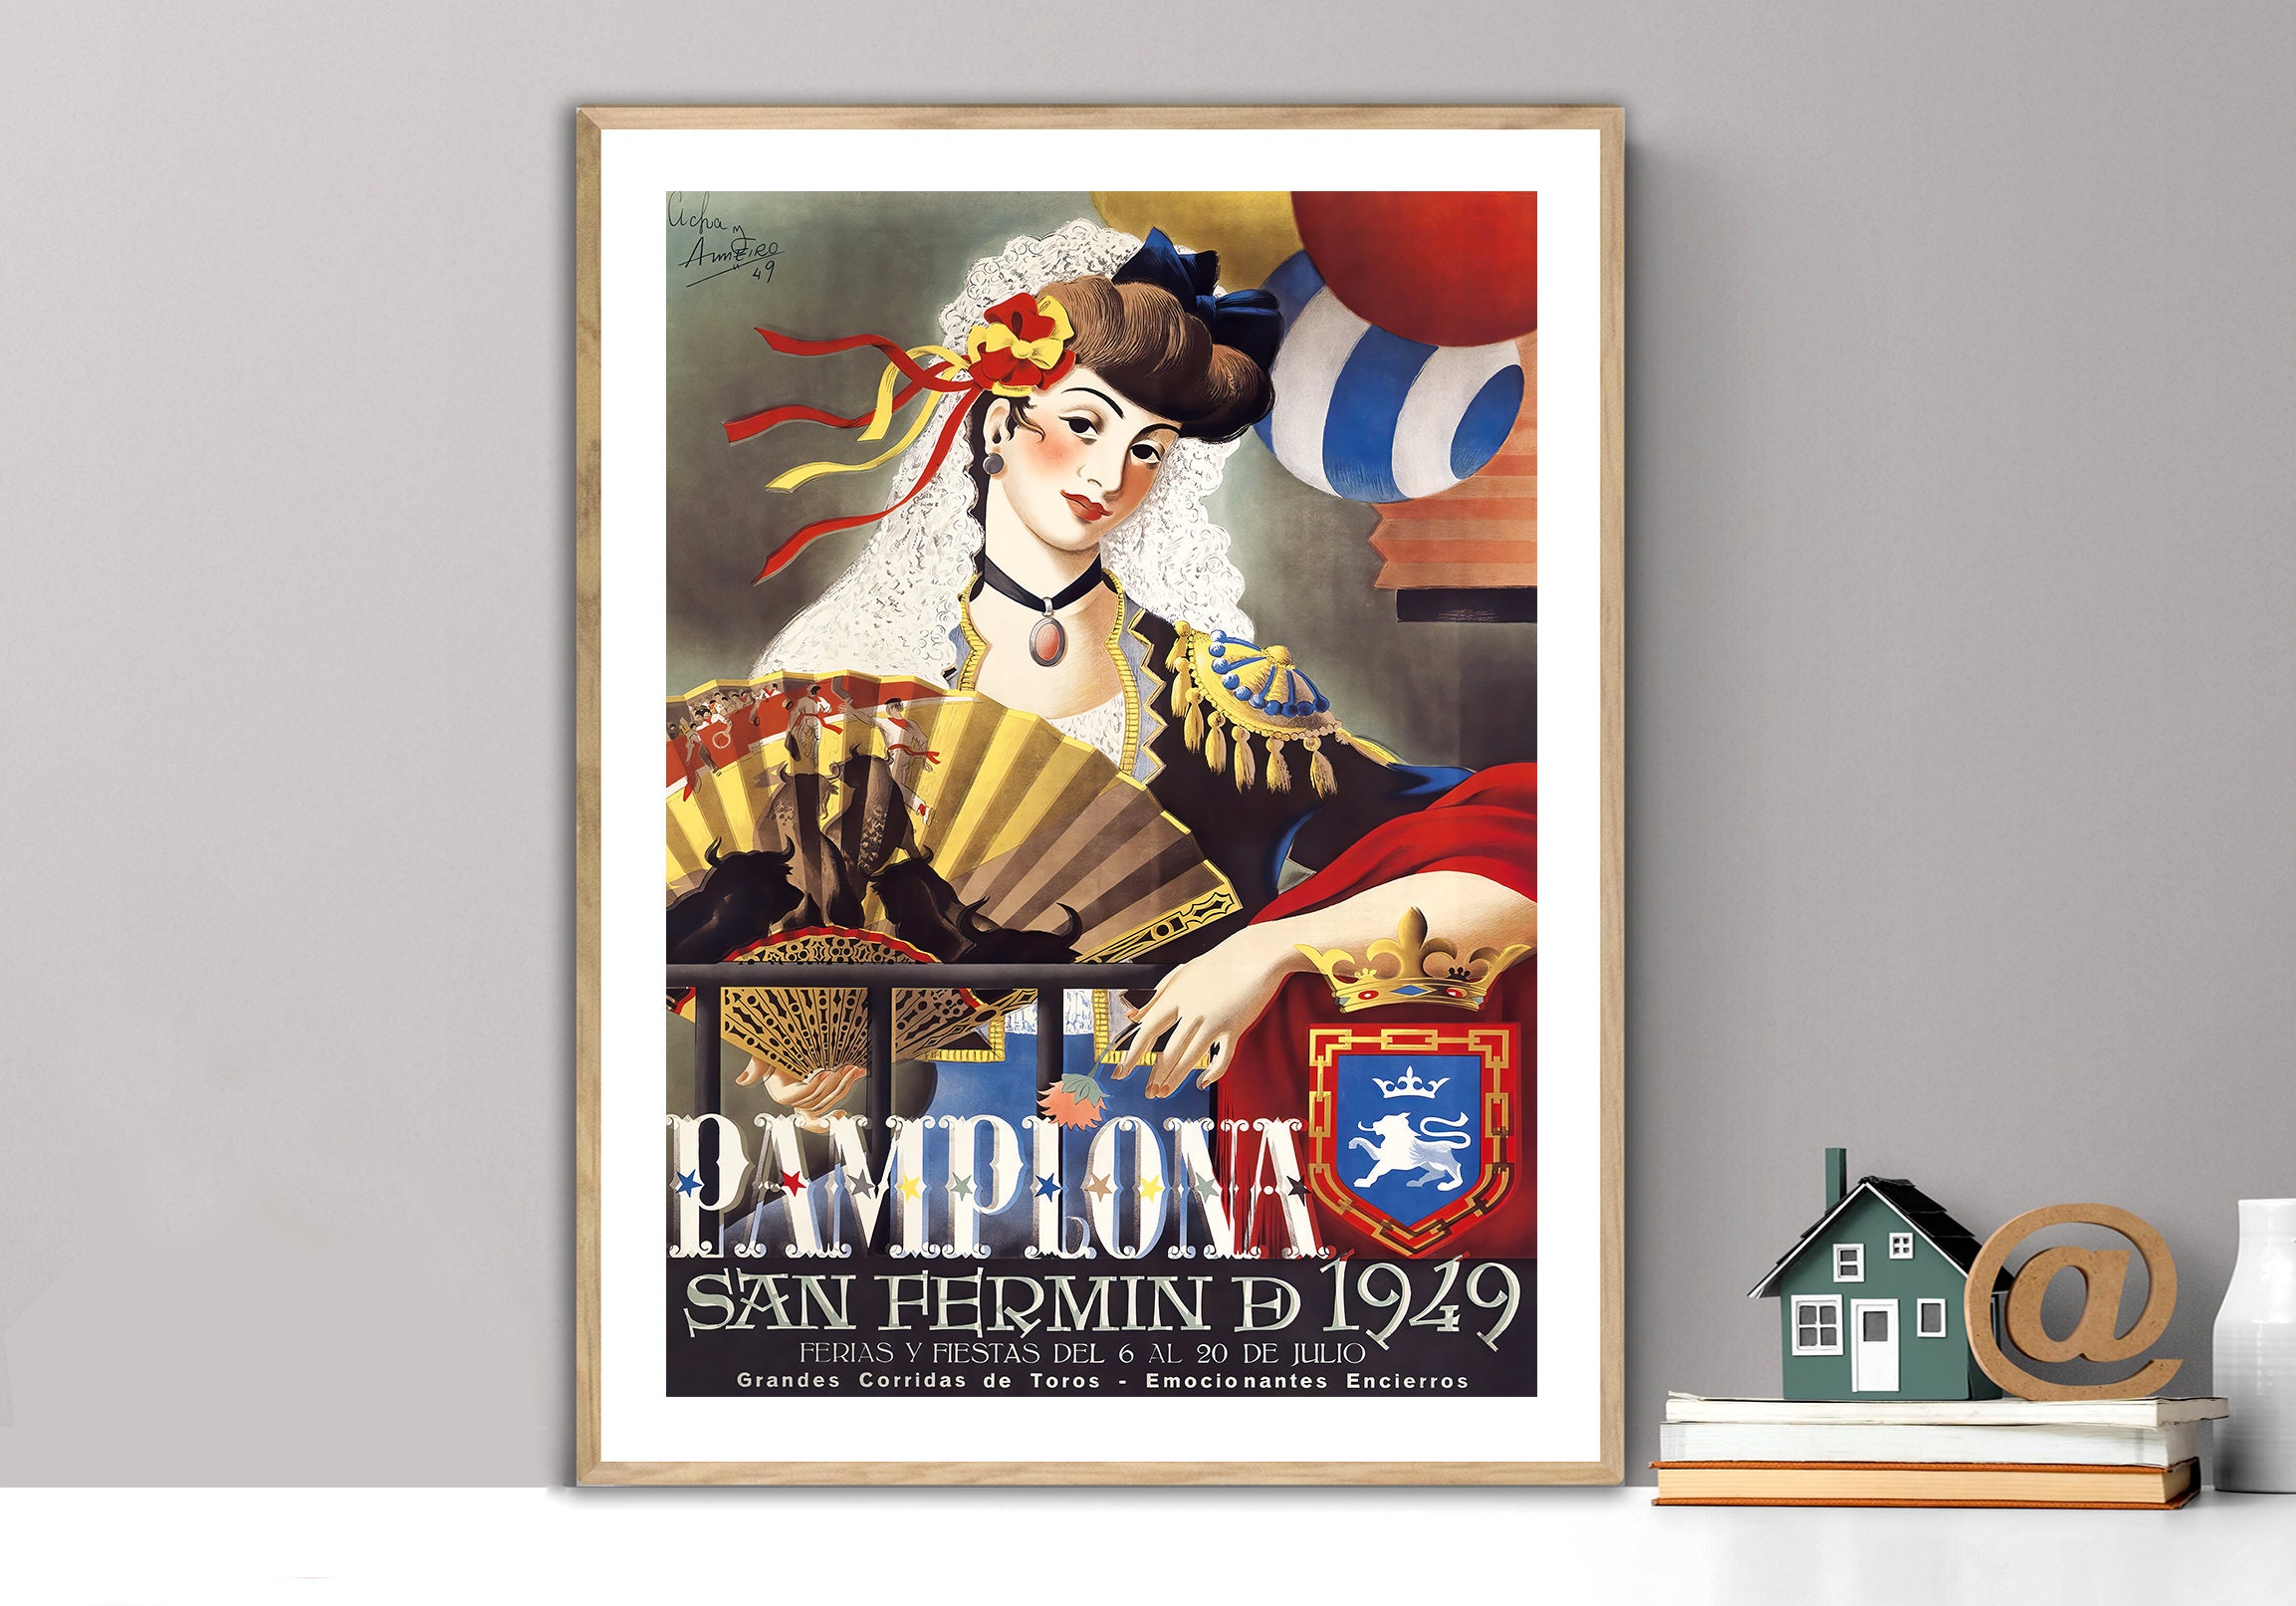 1949 Pamplona San Fermin D Spain Vintage Travel Advertisement Art Poster Print 